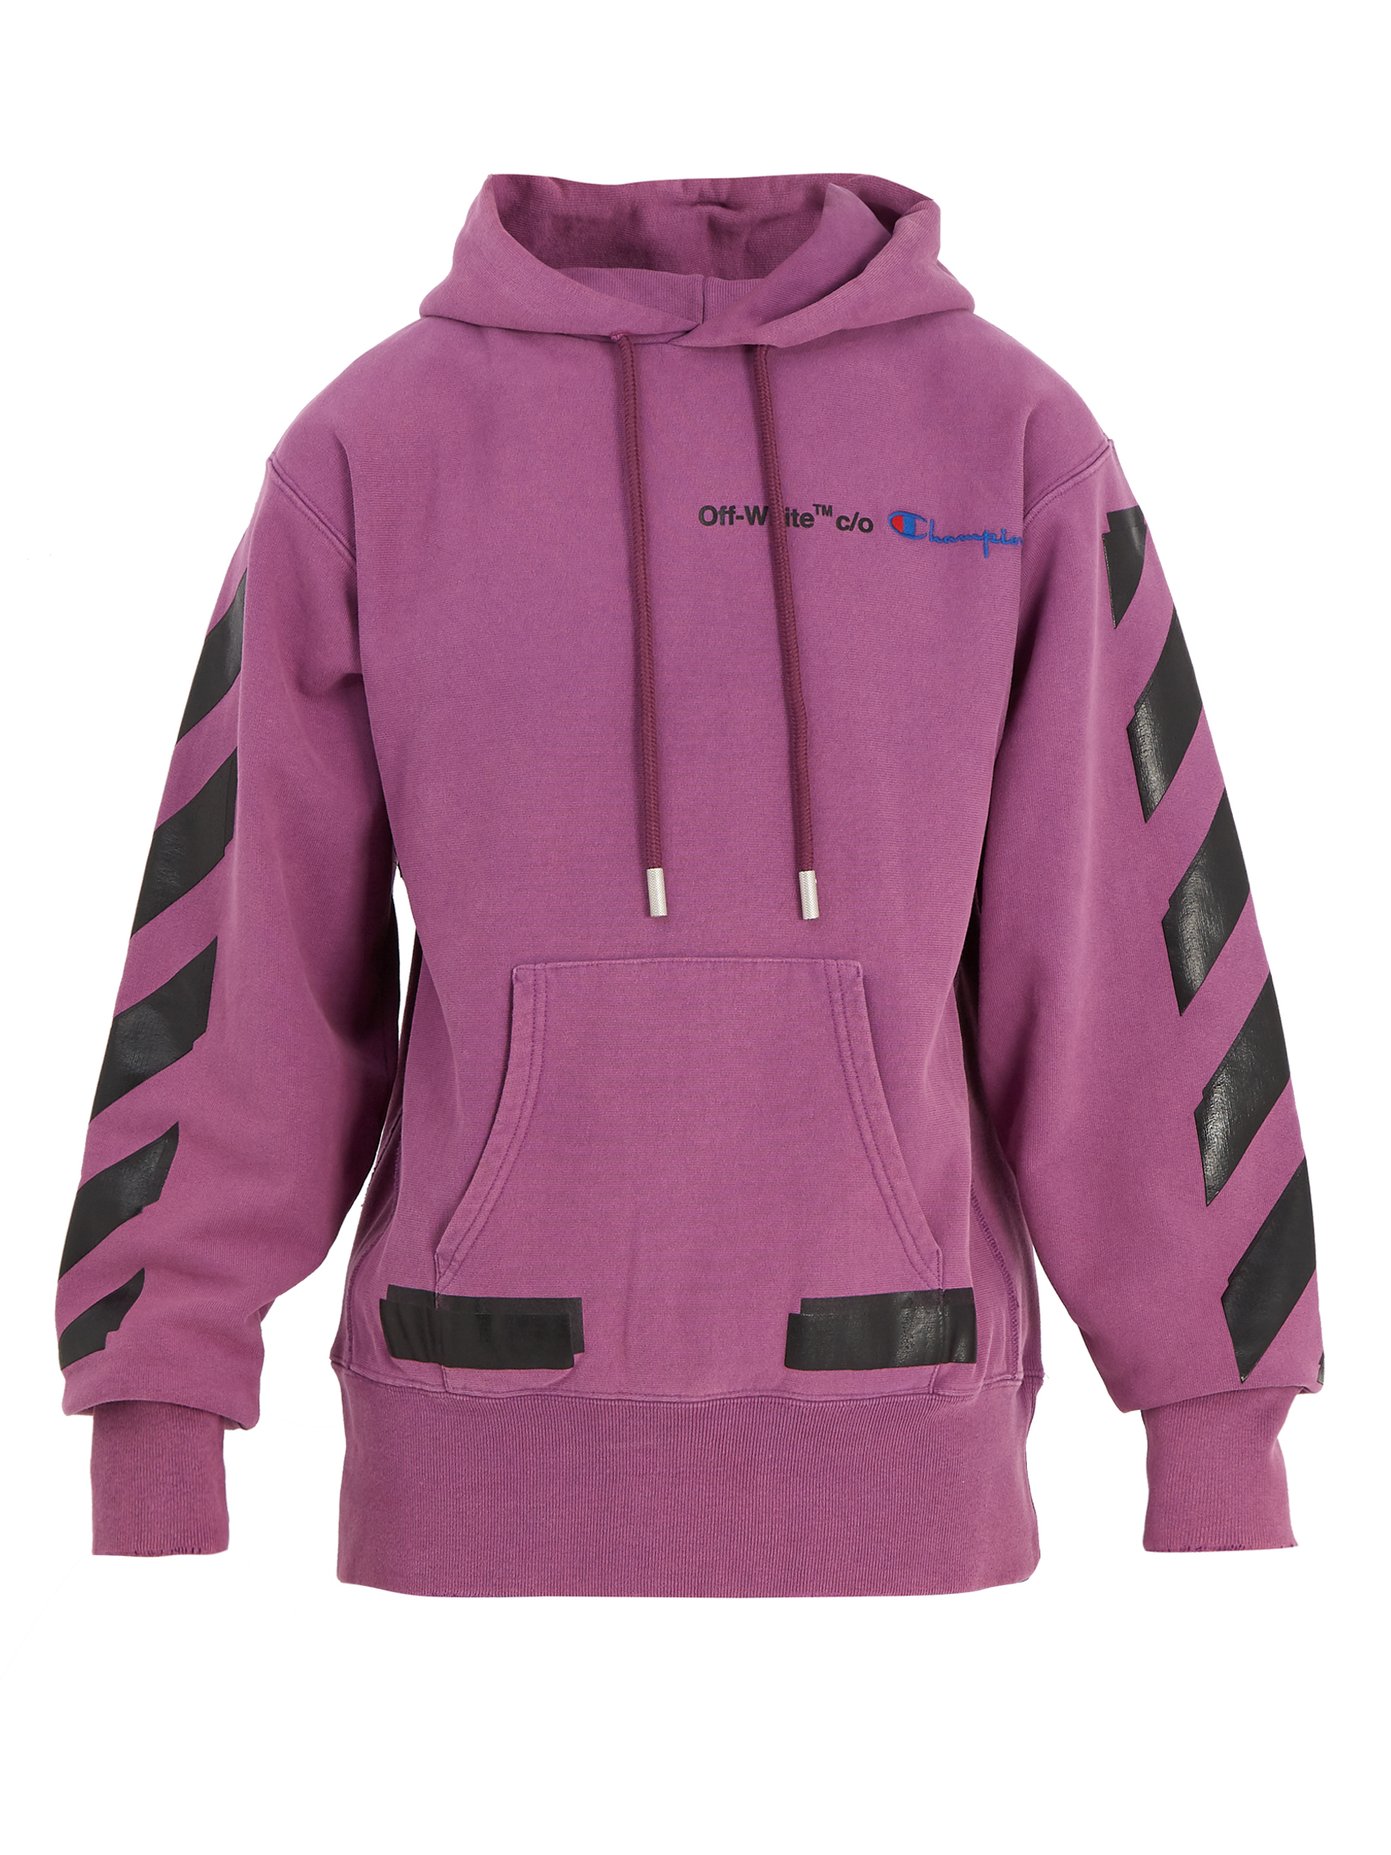 off white x champion purple hoodie